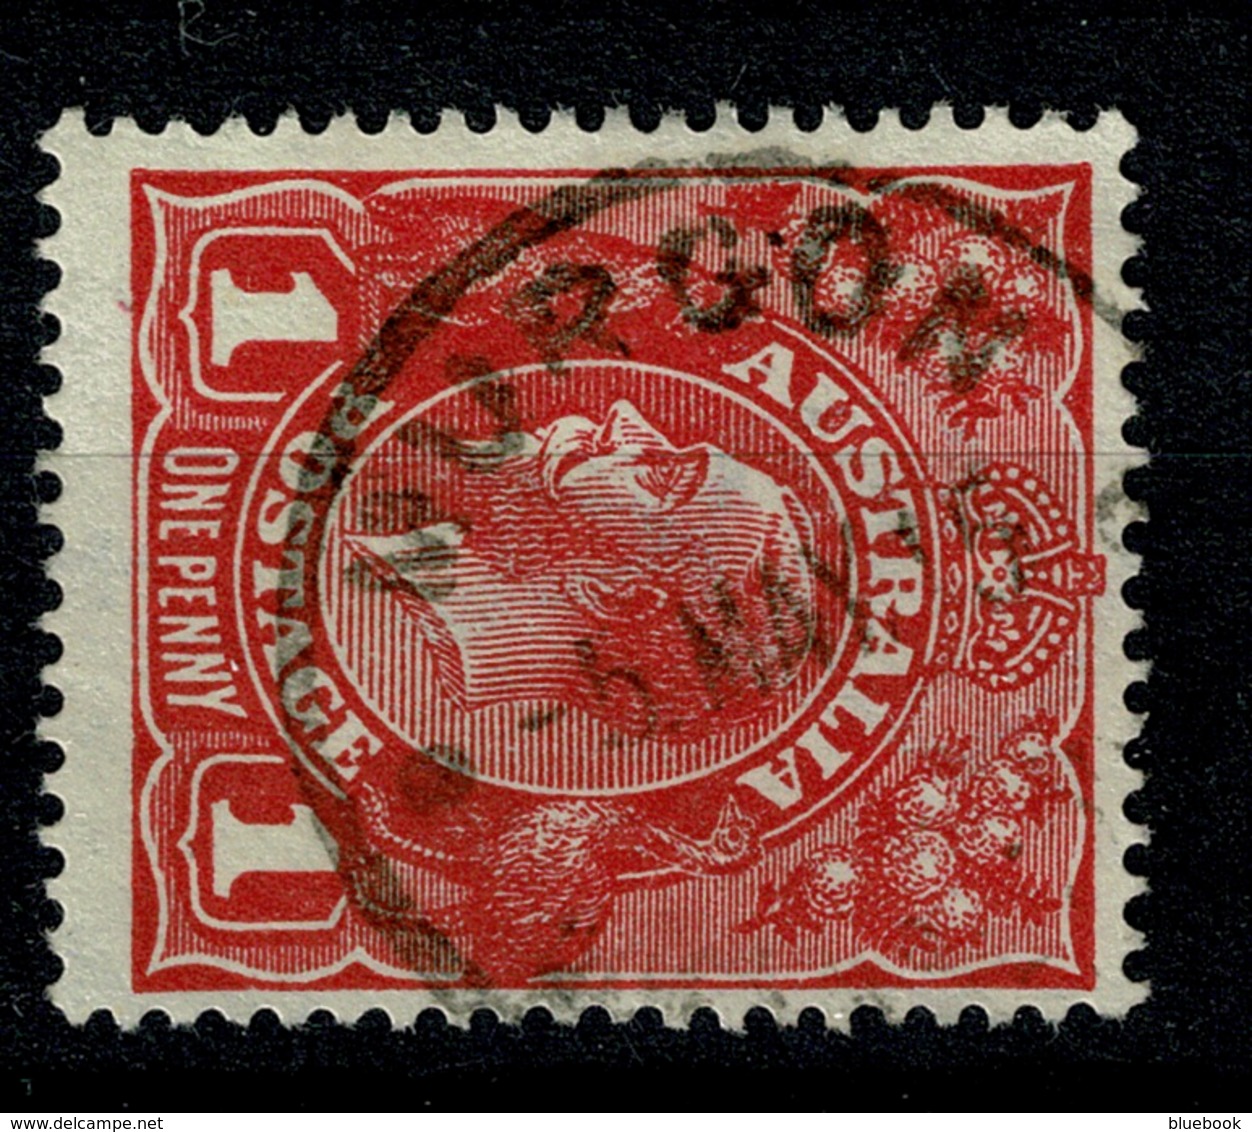 Ref 1258 - 1915 Australia KGV 1d Head Used Stamp - Murgon Queensland Postmark - Gebraucht